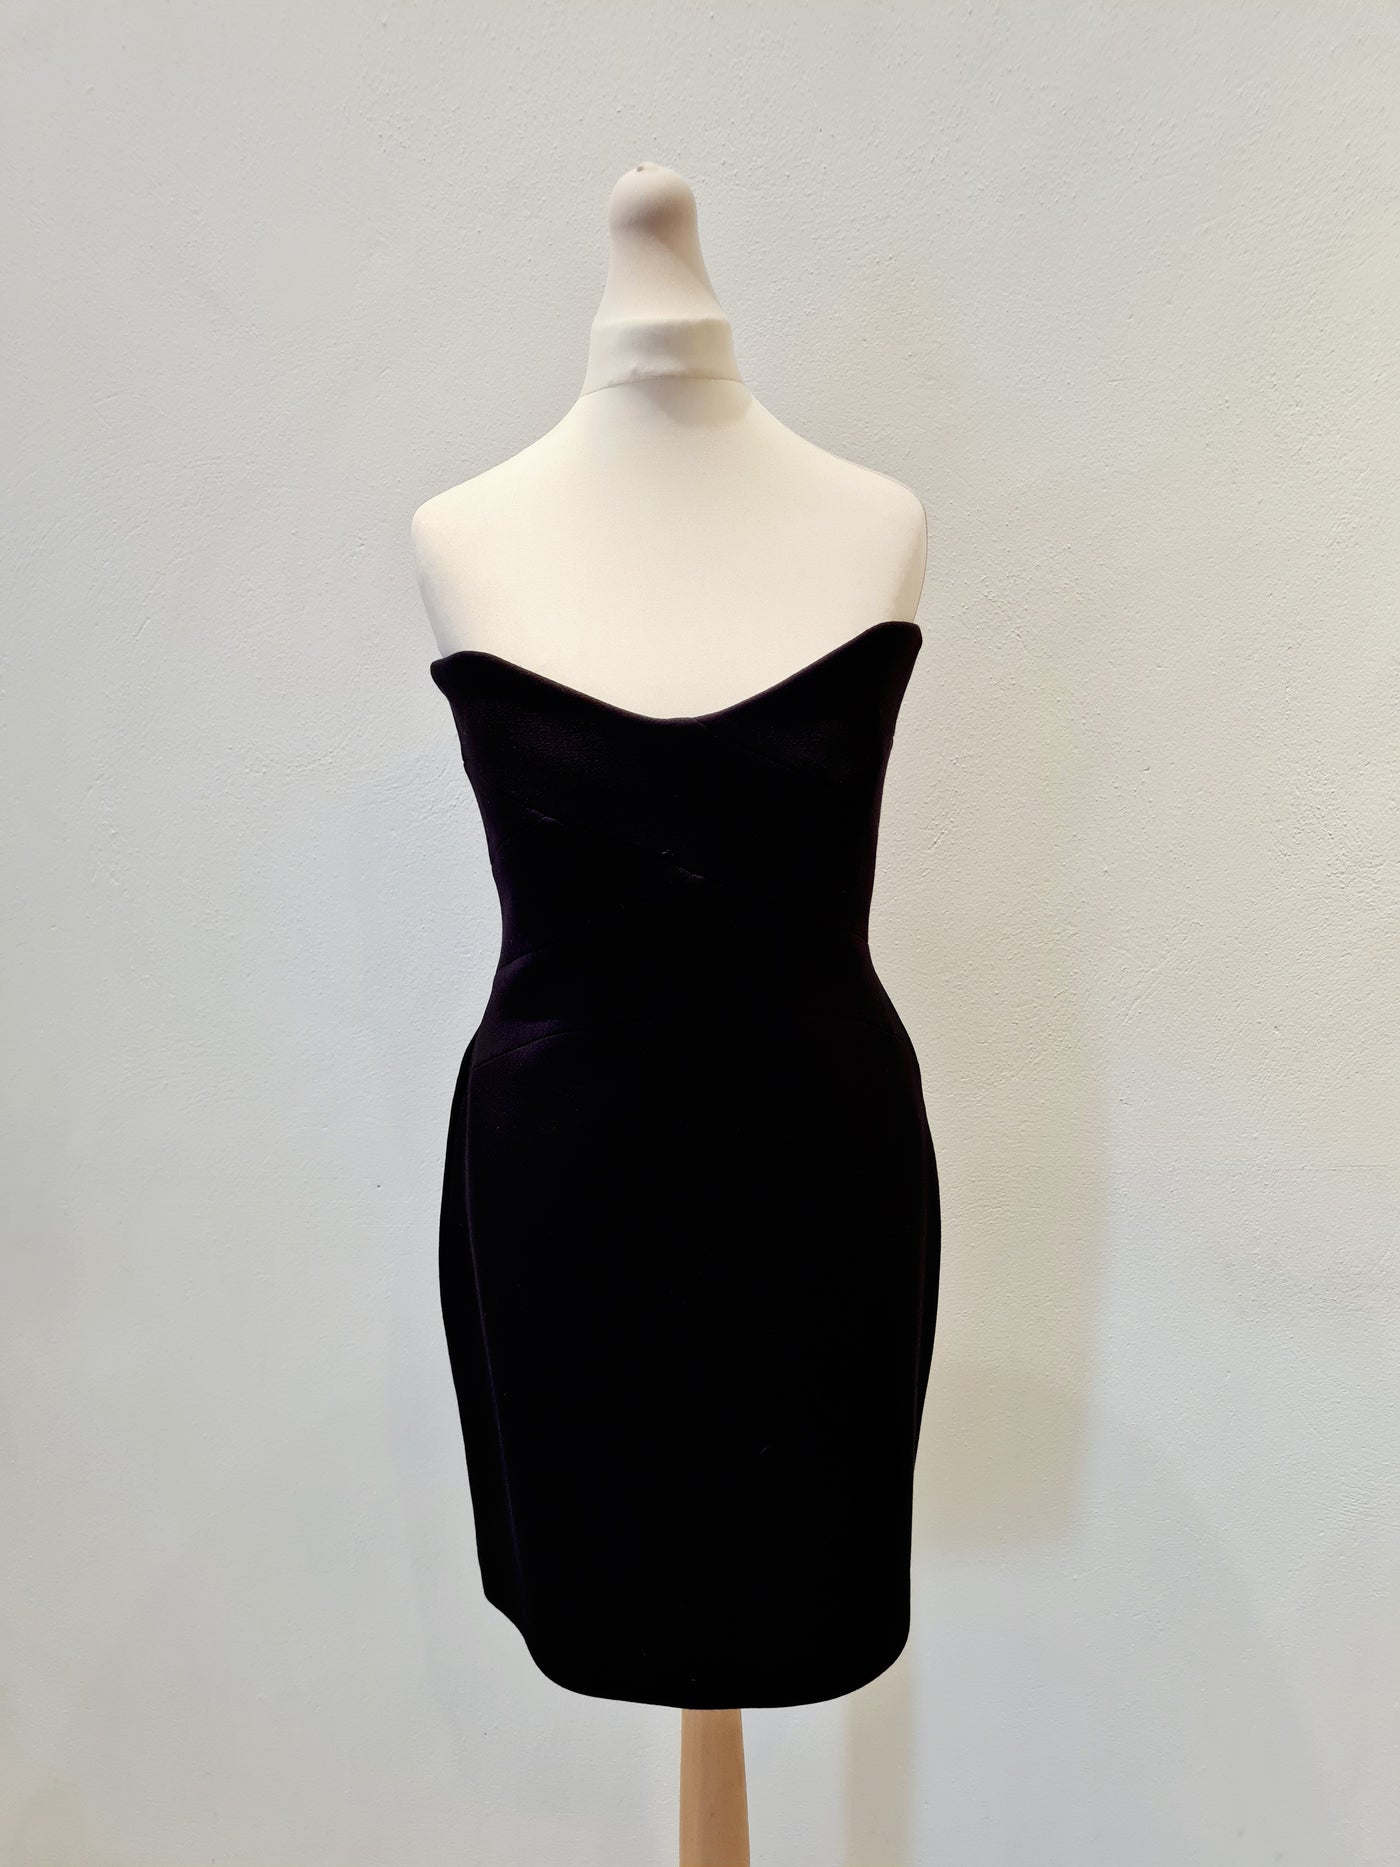 Reiss Black Strapless Jersey Dress NEW RRP £150 14